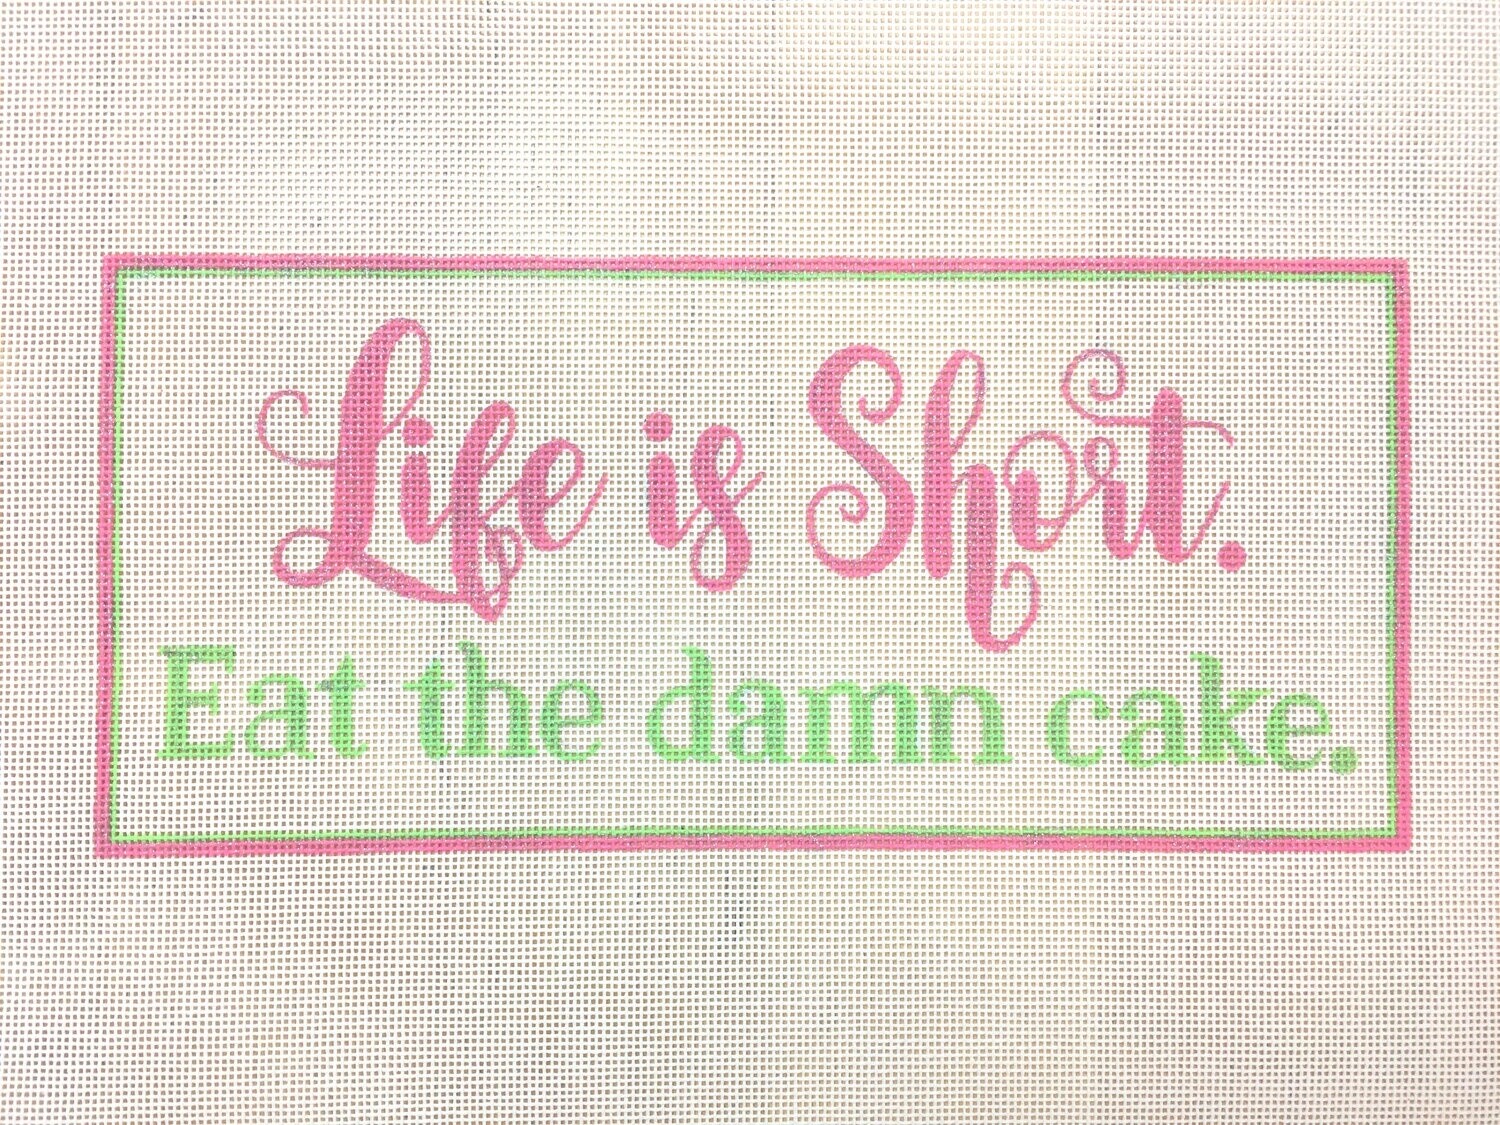 Life is Short. Eat the Damn Cake